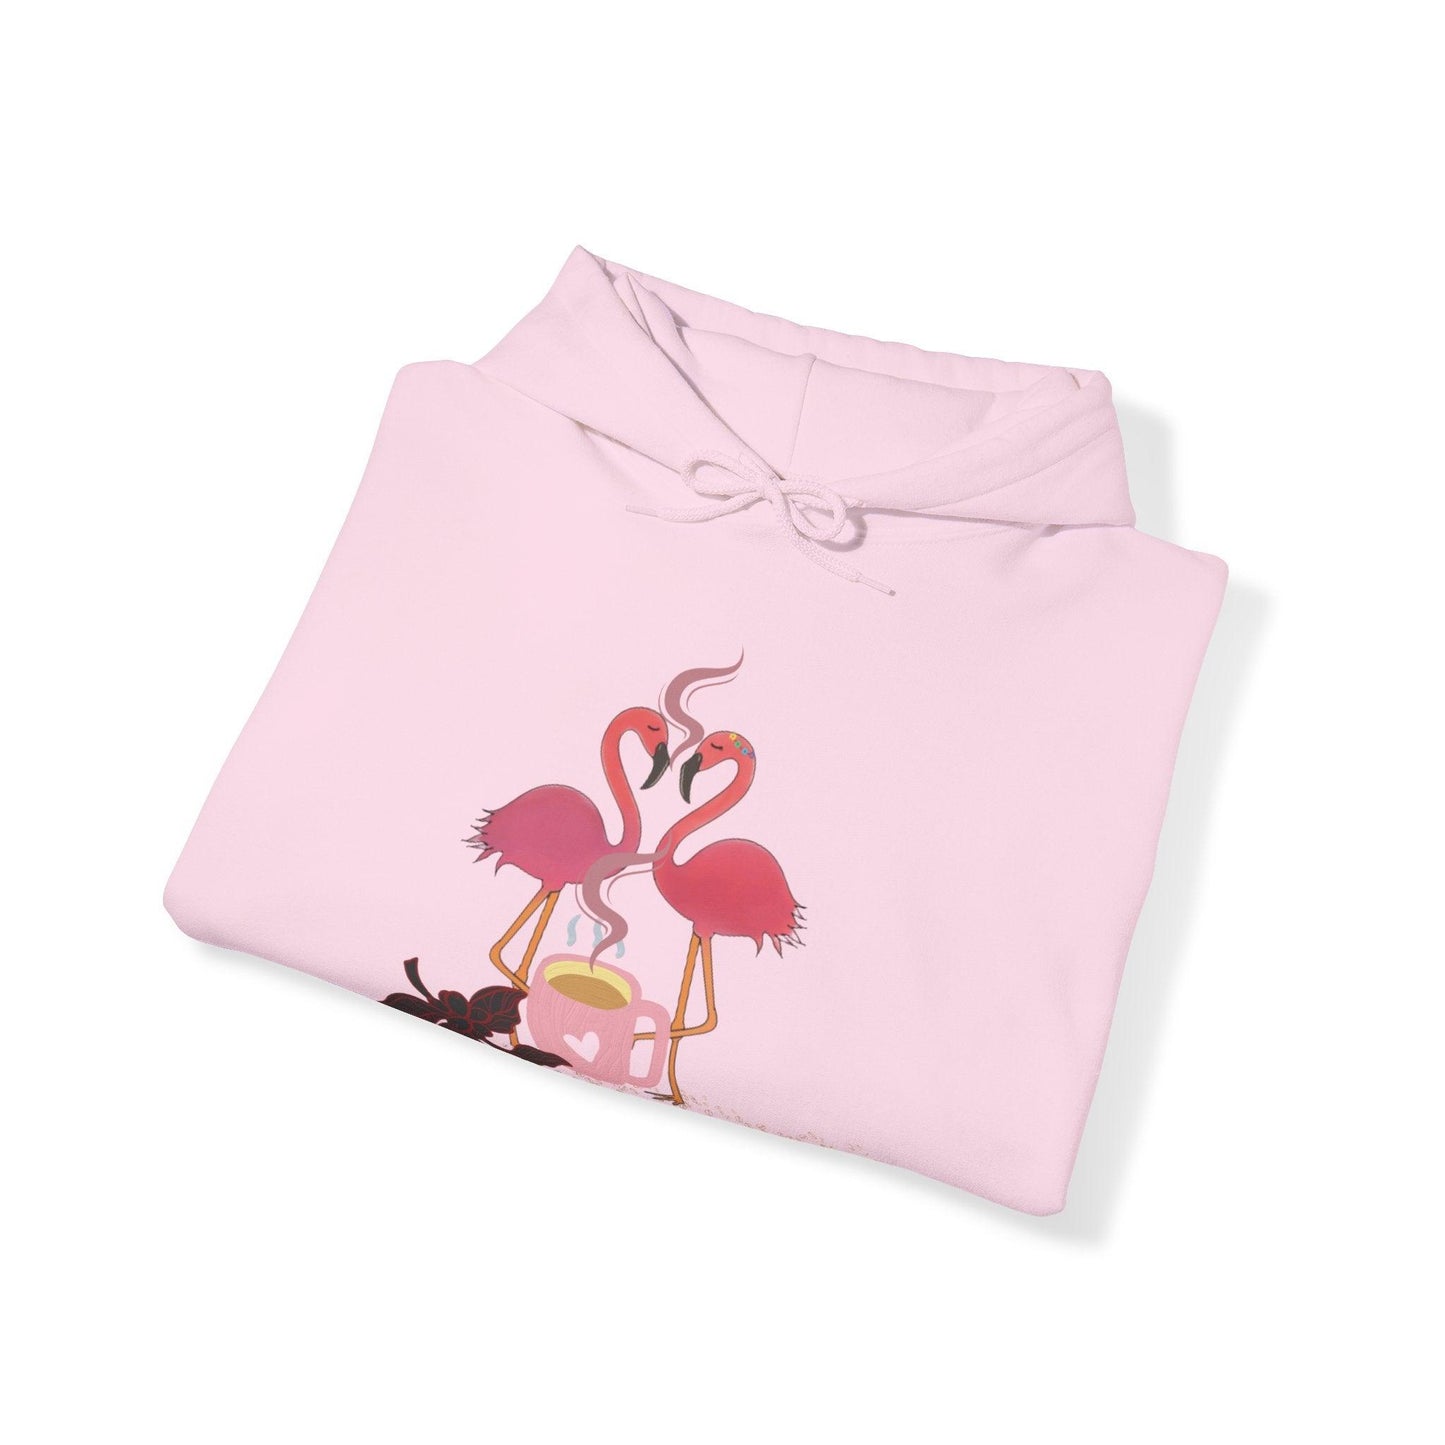 Flamingo Coffee Date Hooded Sweatshirt - COFFEEBRE